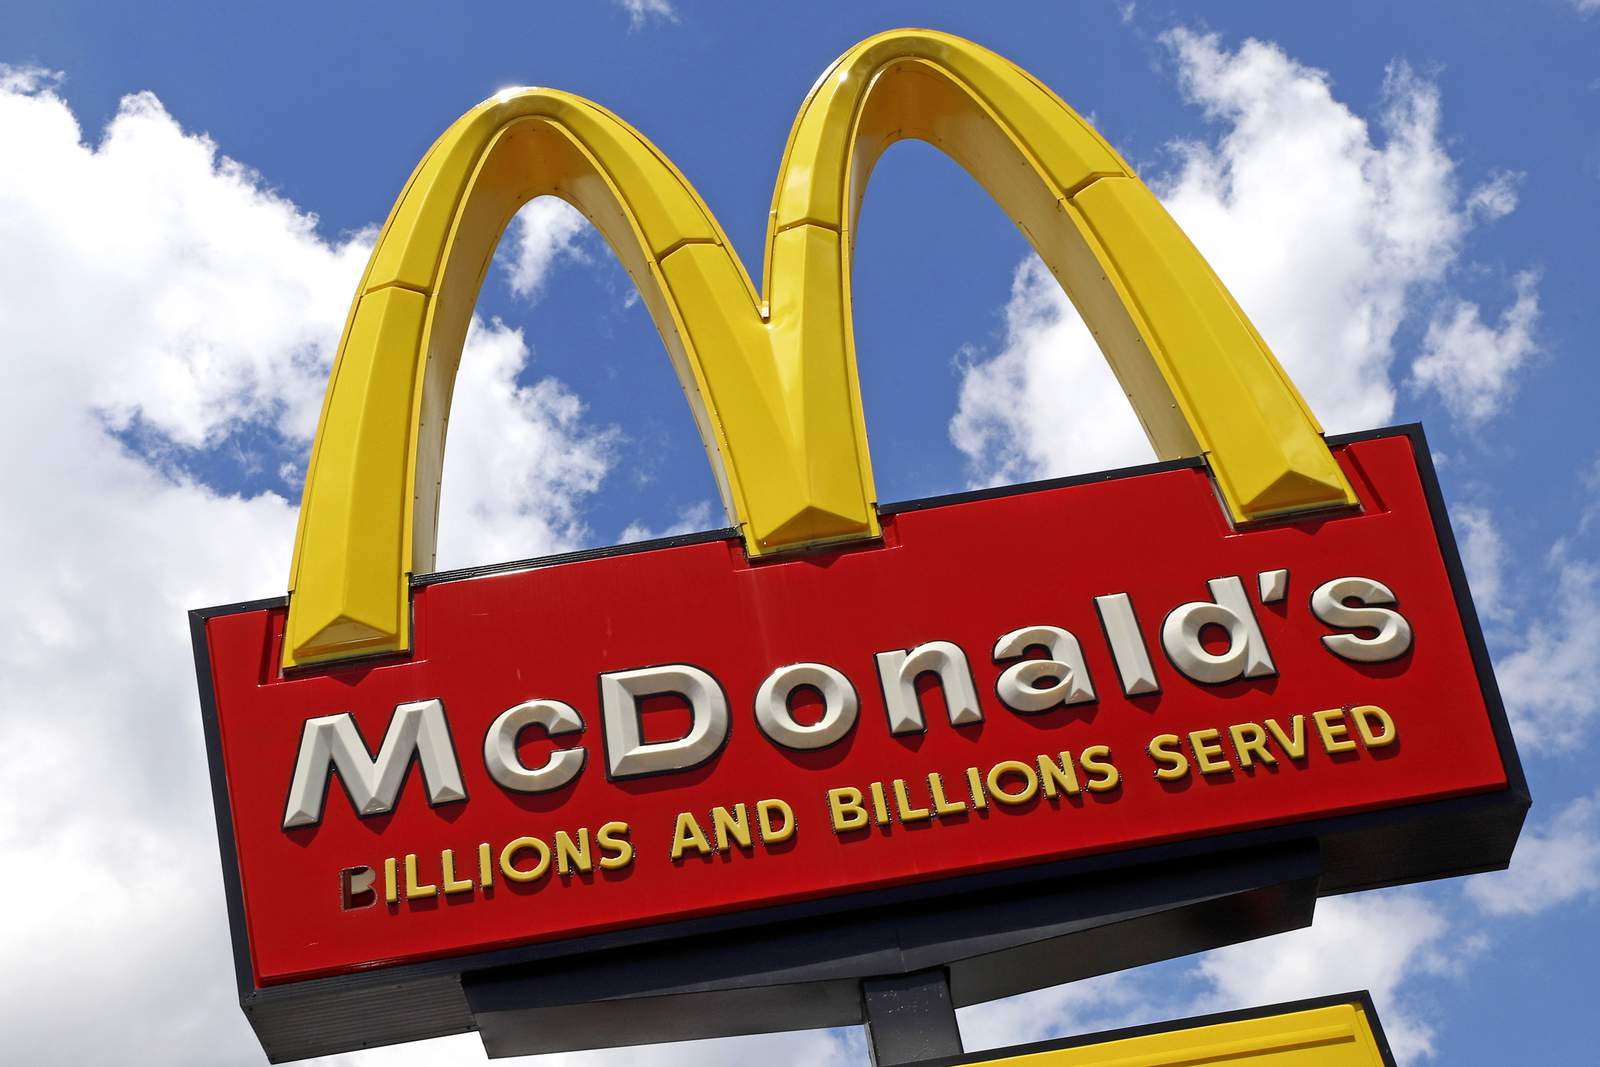 Black former franchisees sue McDonald's for discrimination